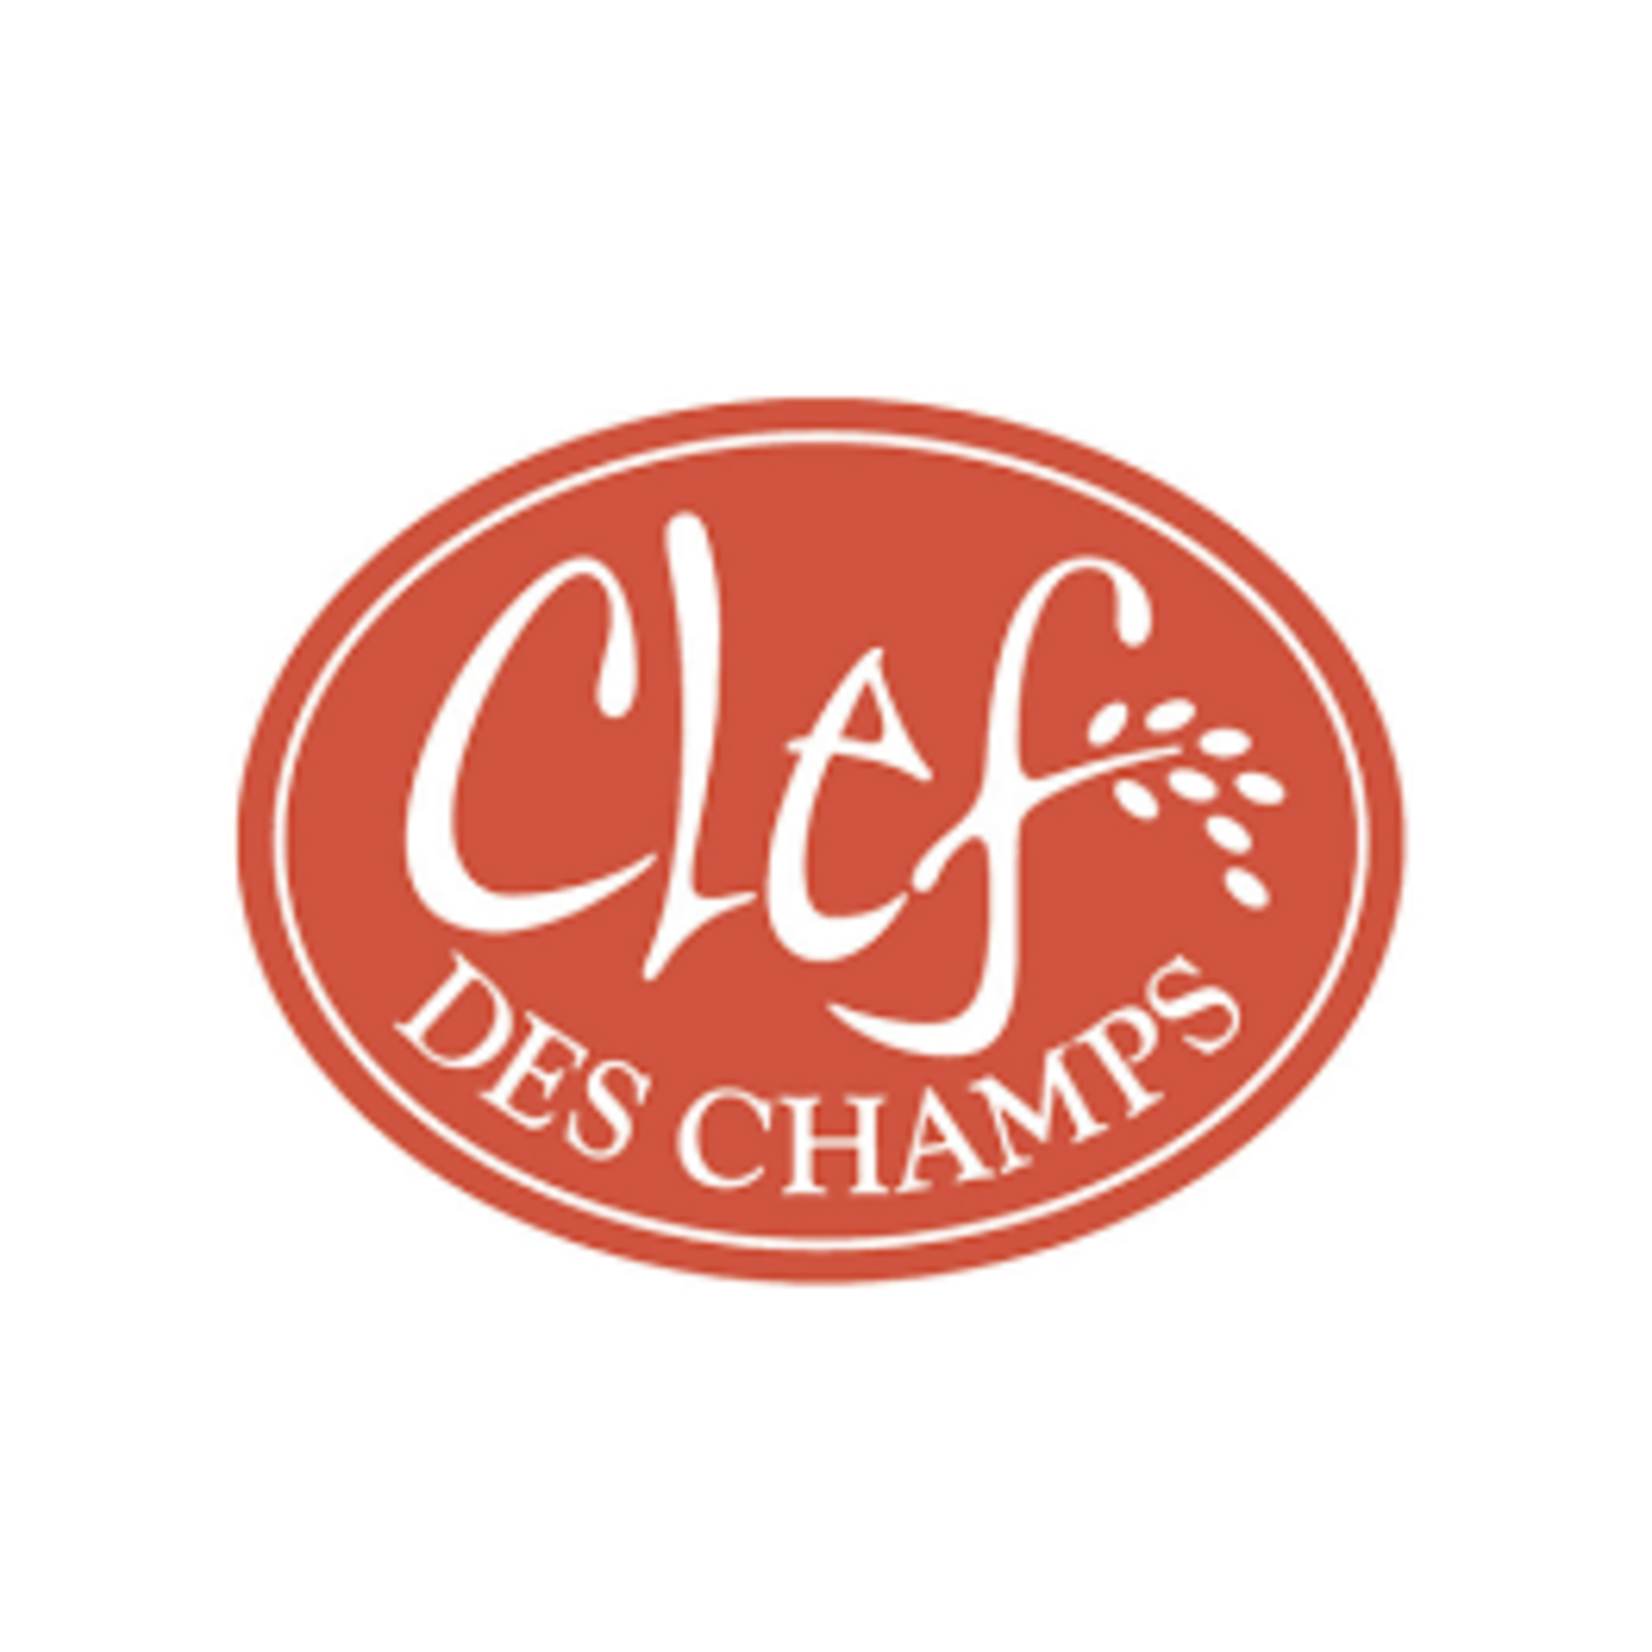 CLEF DES CHAMPS CLEF TIE GUANYIN TEA 100G